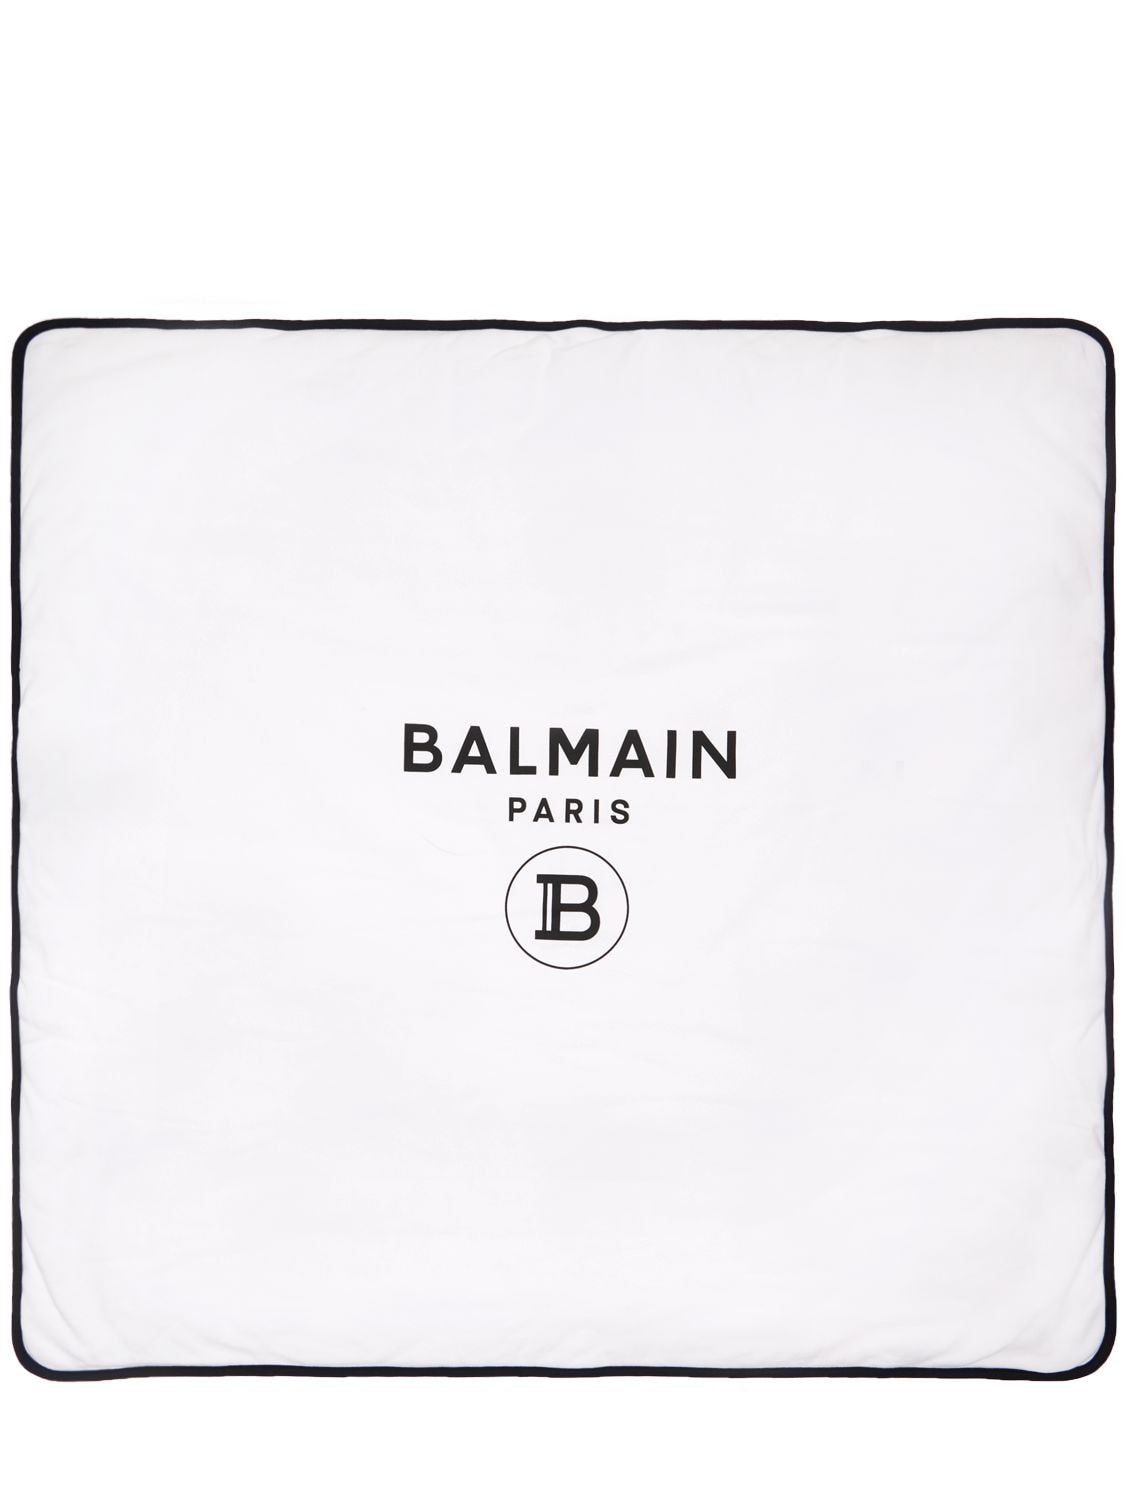 Balmain Logo Print Cotton Interlock Blanket In White